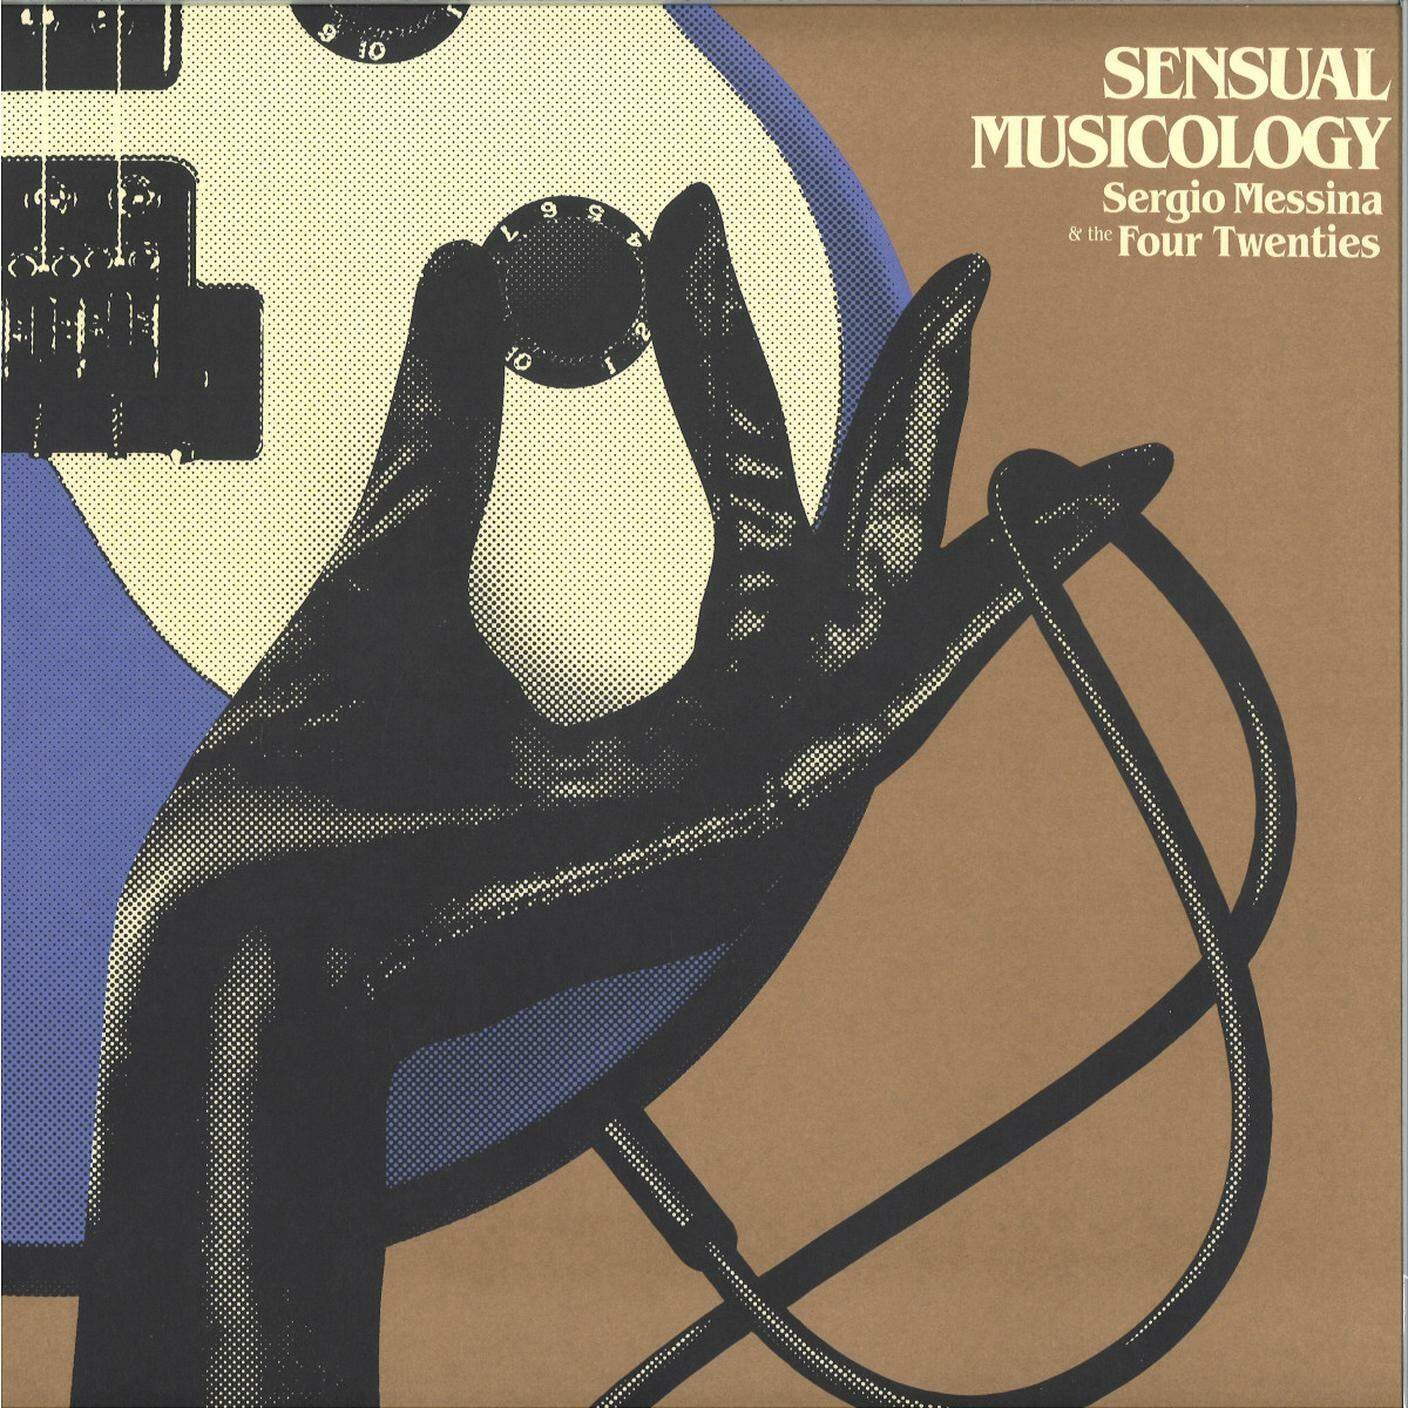 "Sensual Musicology. Music about Music" di Sergio Messina & the Four Twenties, Hell Yeah Recordings 2022 (dettaglio di copertina)